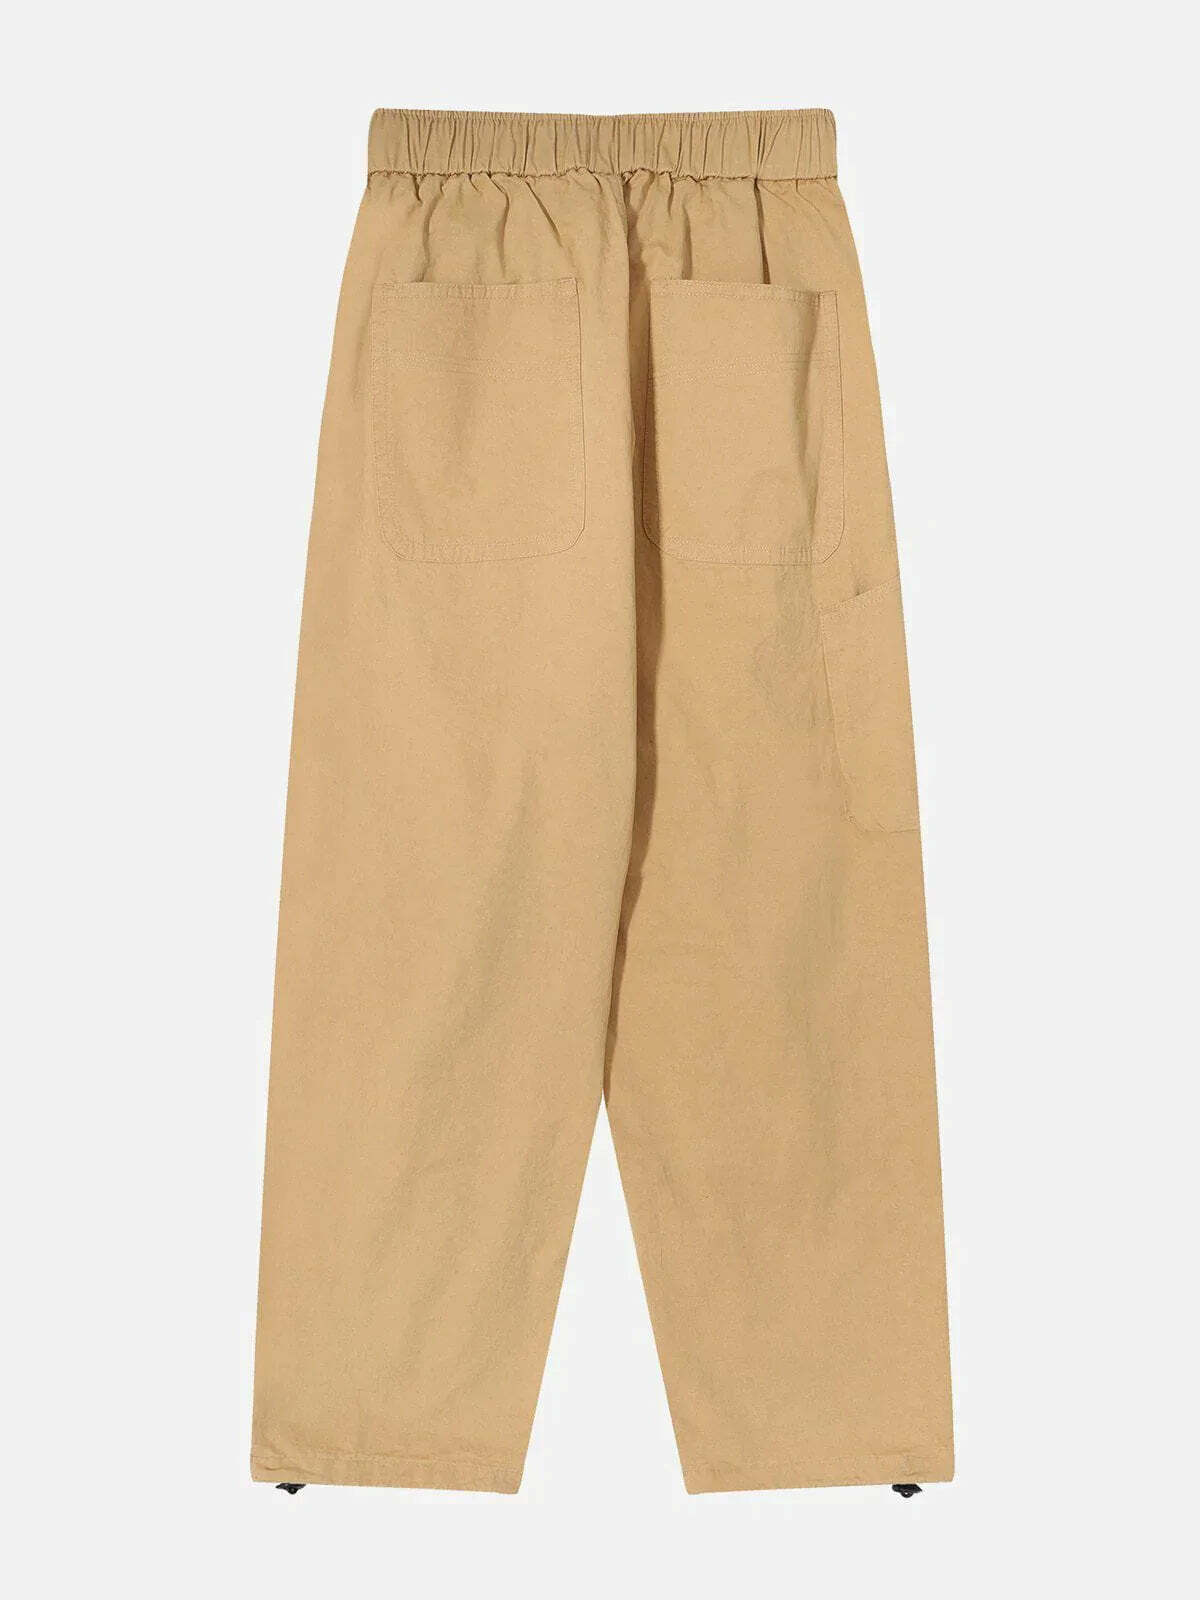 dynamic elastic waistband pants 4030